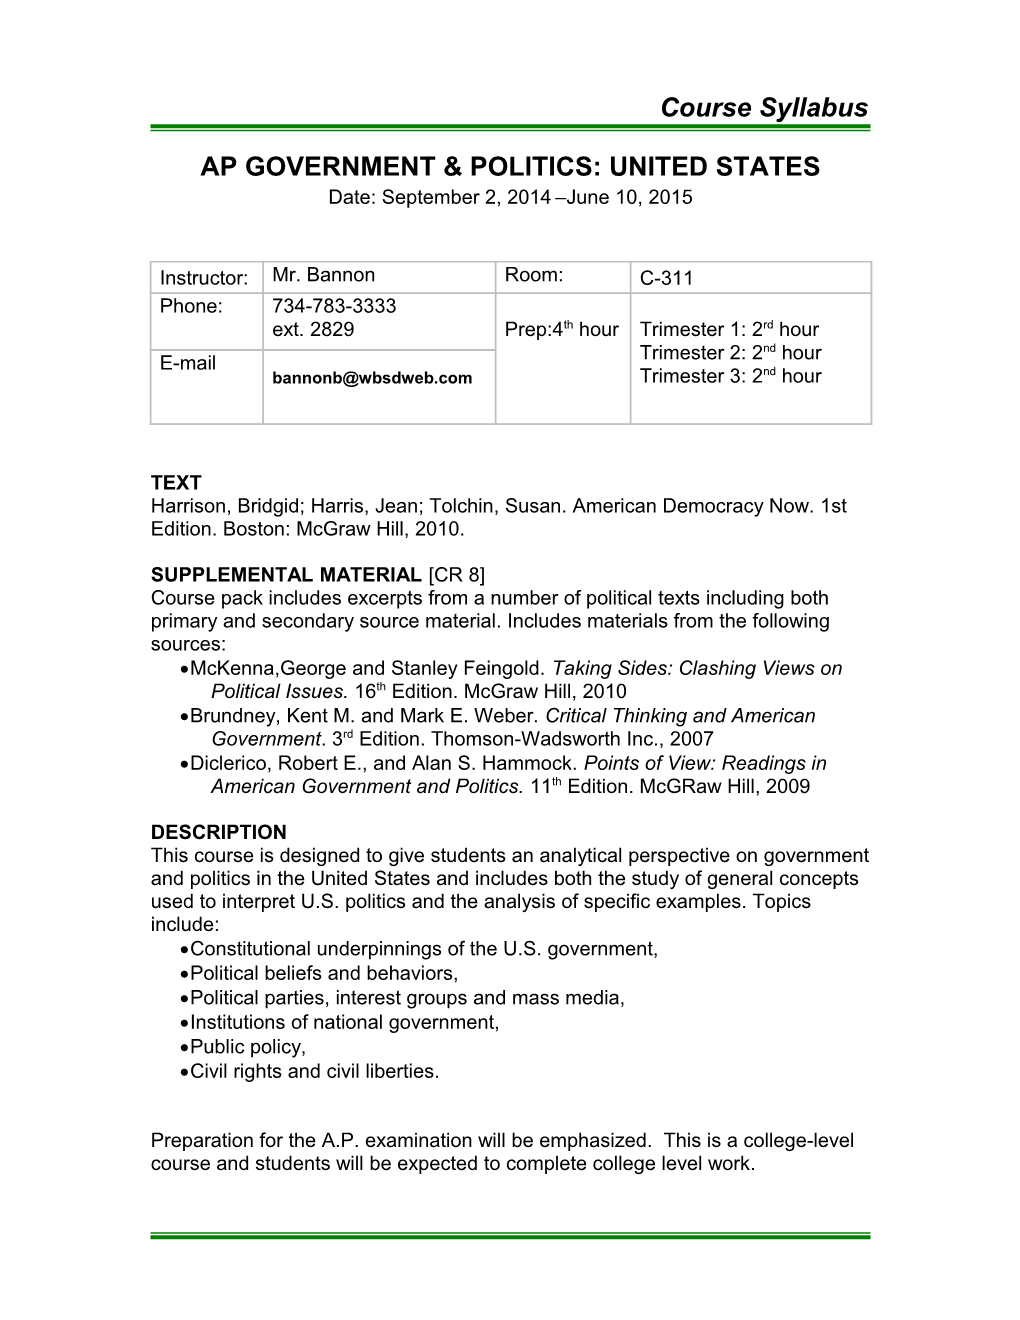 AP Government & Politics: United States - Course Syllabus (Cont.)